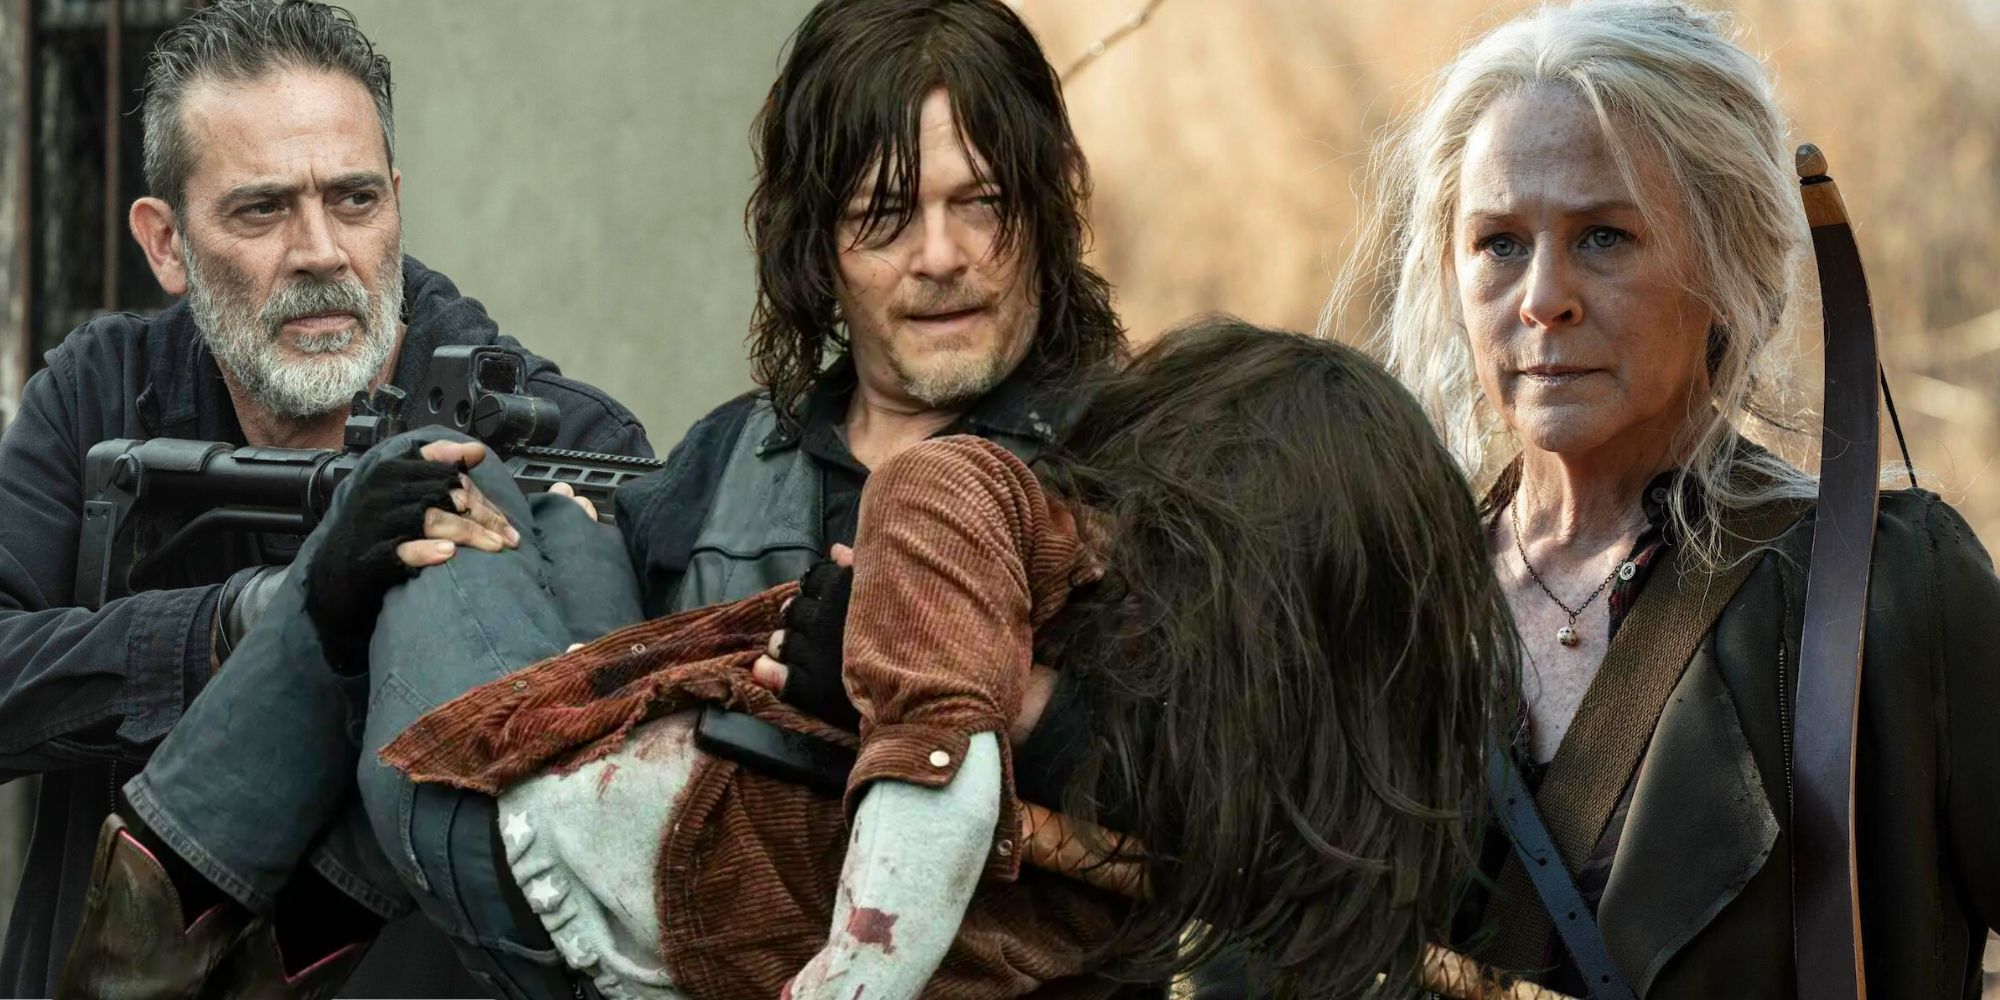 Negan, Daryl, Judith, and Carol from The Walking Dead